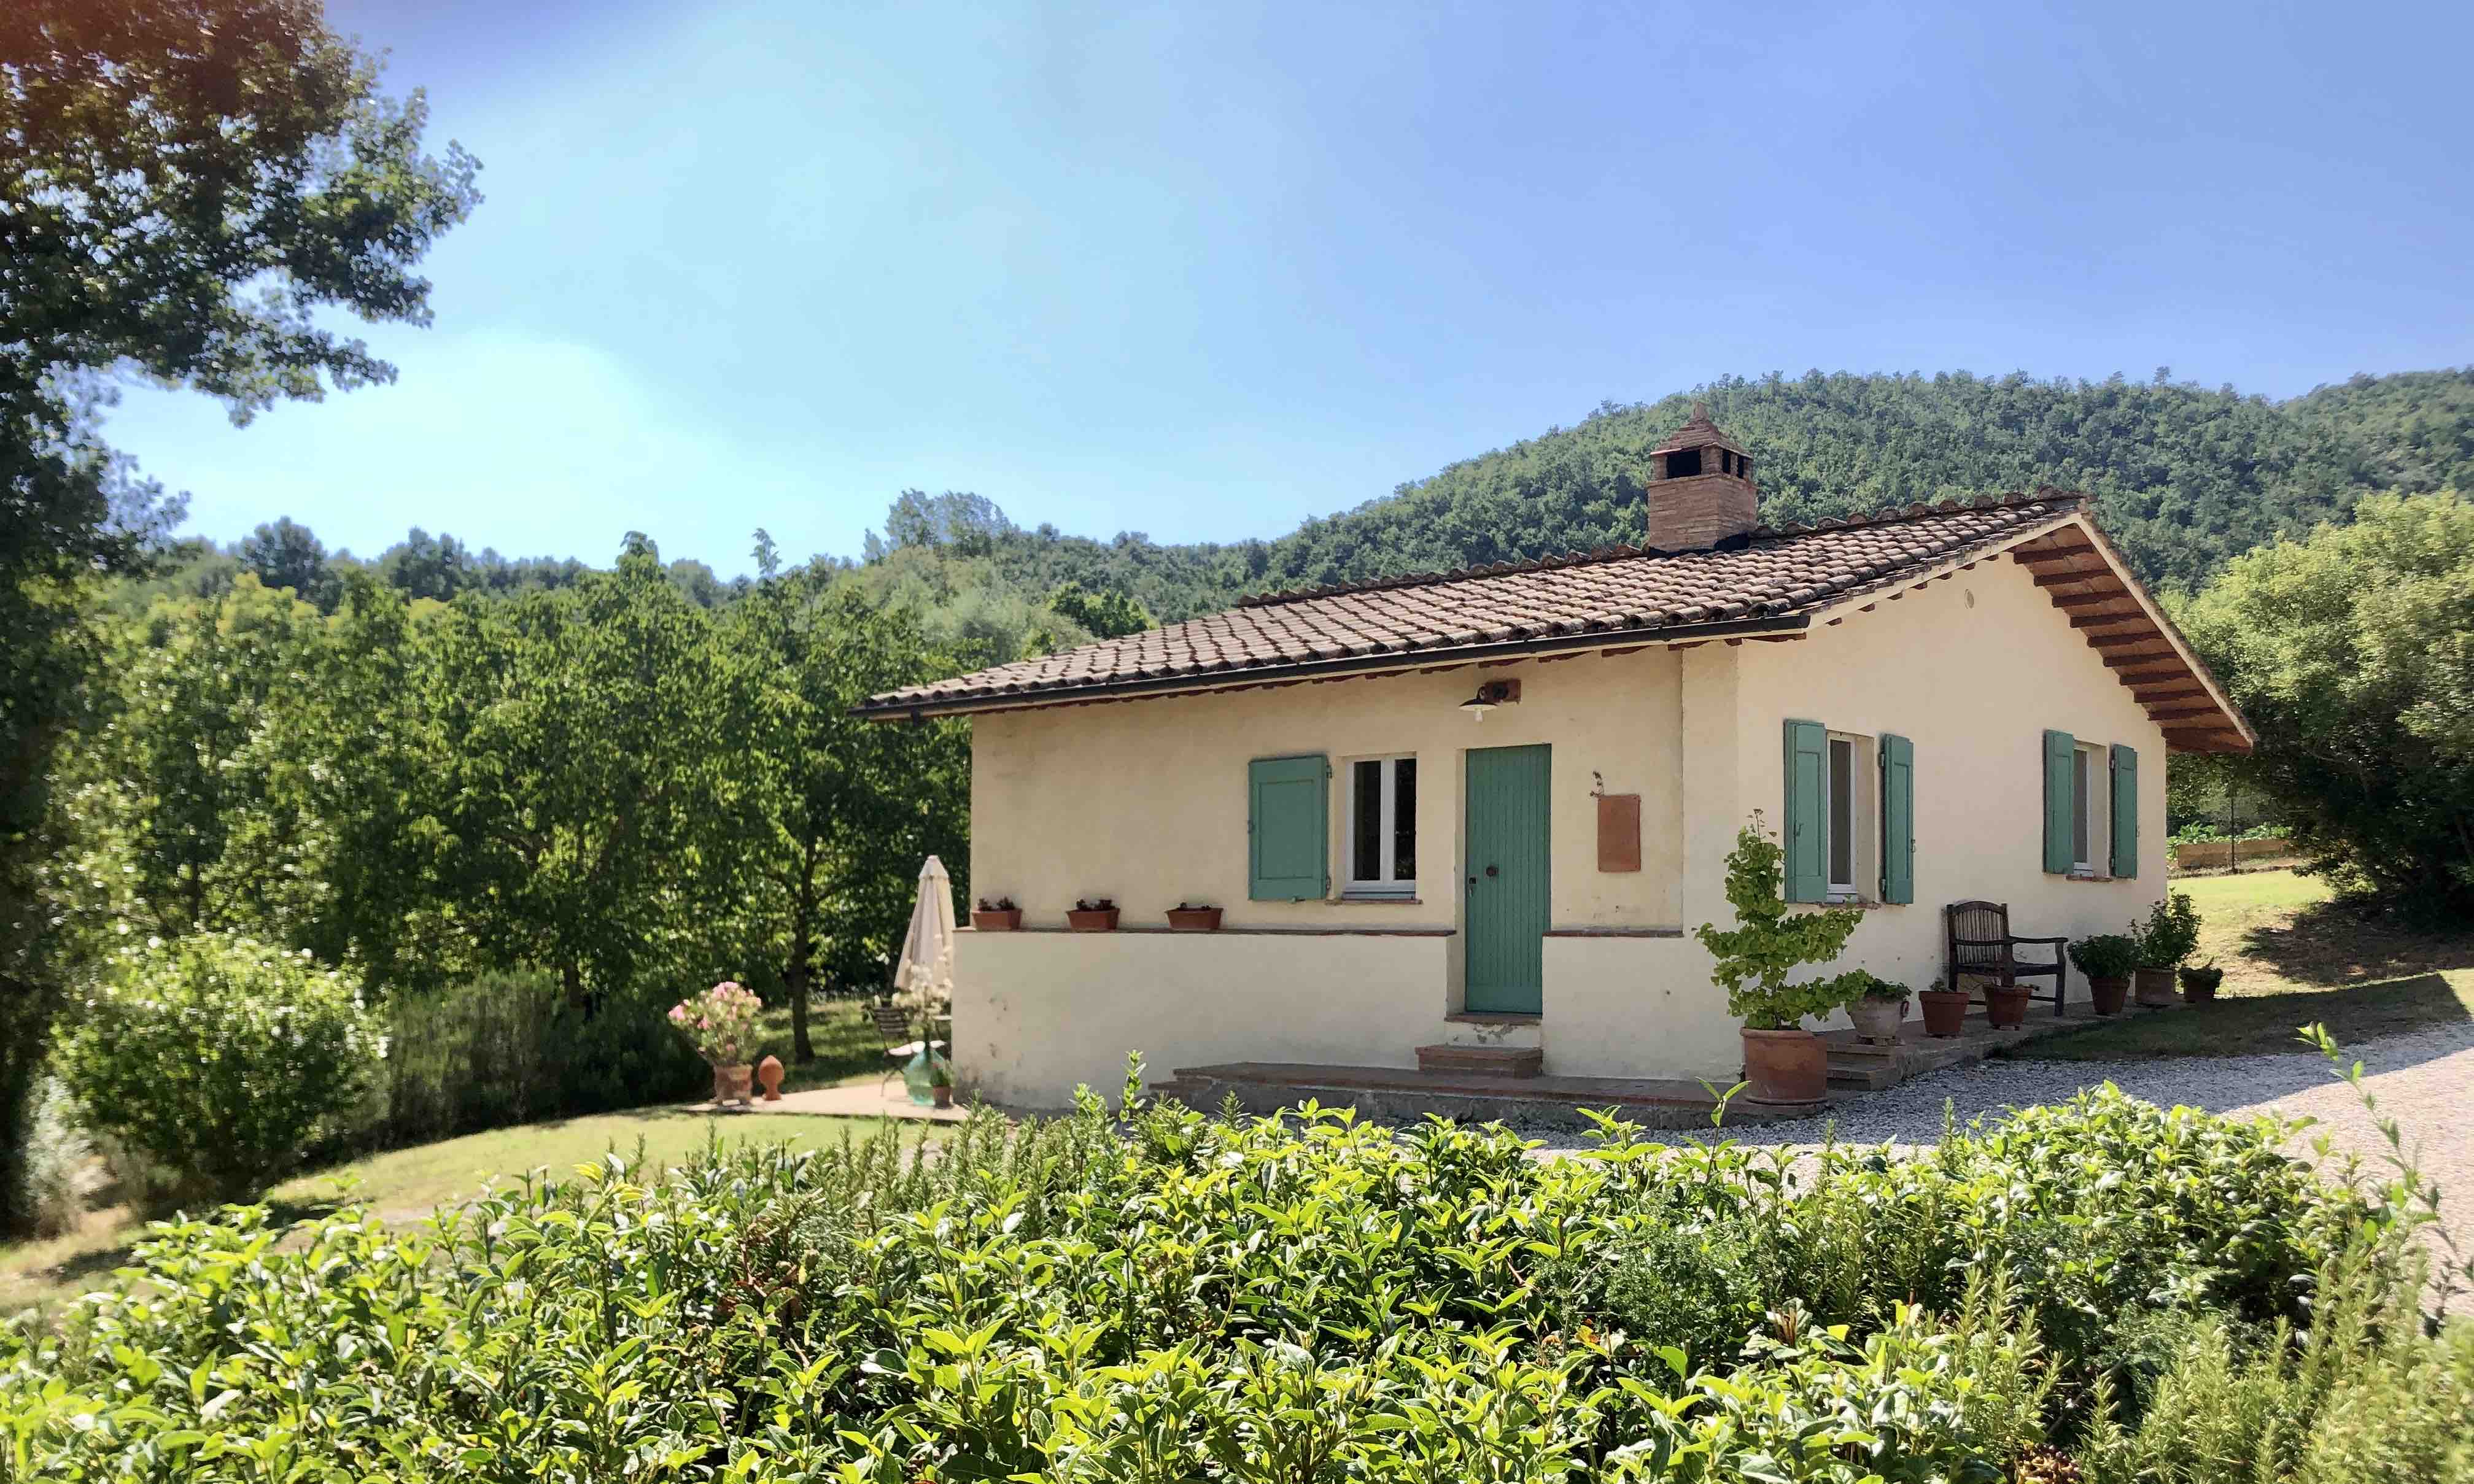 Tenuta Santa Croce - Cottage Hut - Cottages for Rent in Umbertide, Umbria,  Italy - Airbnb